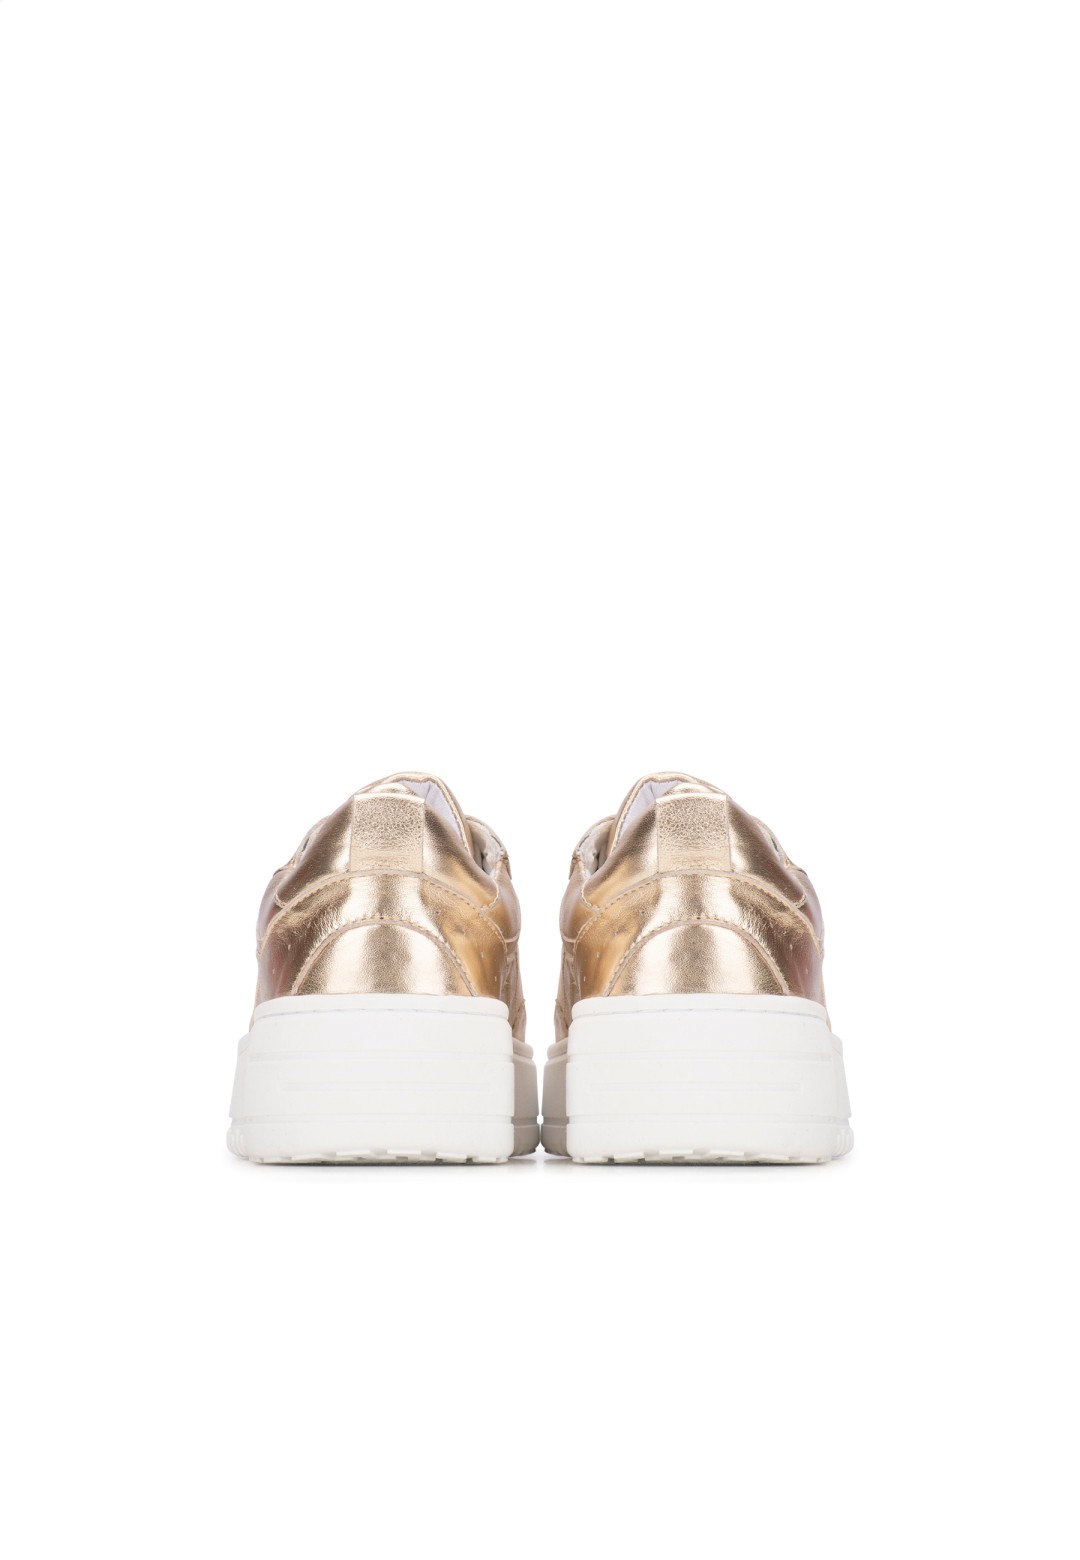 PS Poelman Dames Anemone Sneakers | De officiële POELMAN webshop